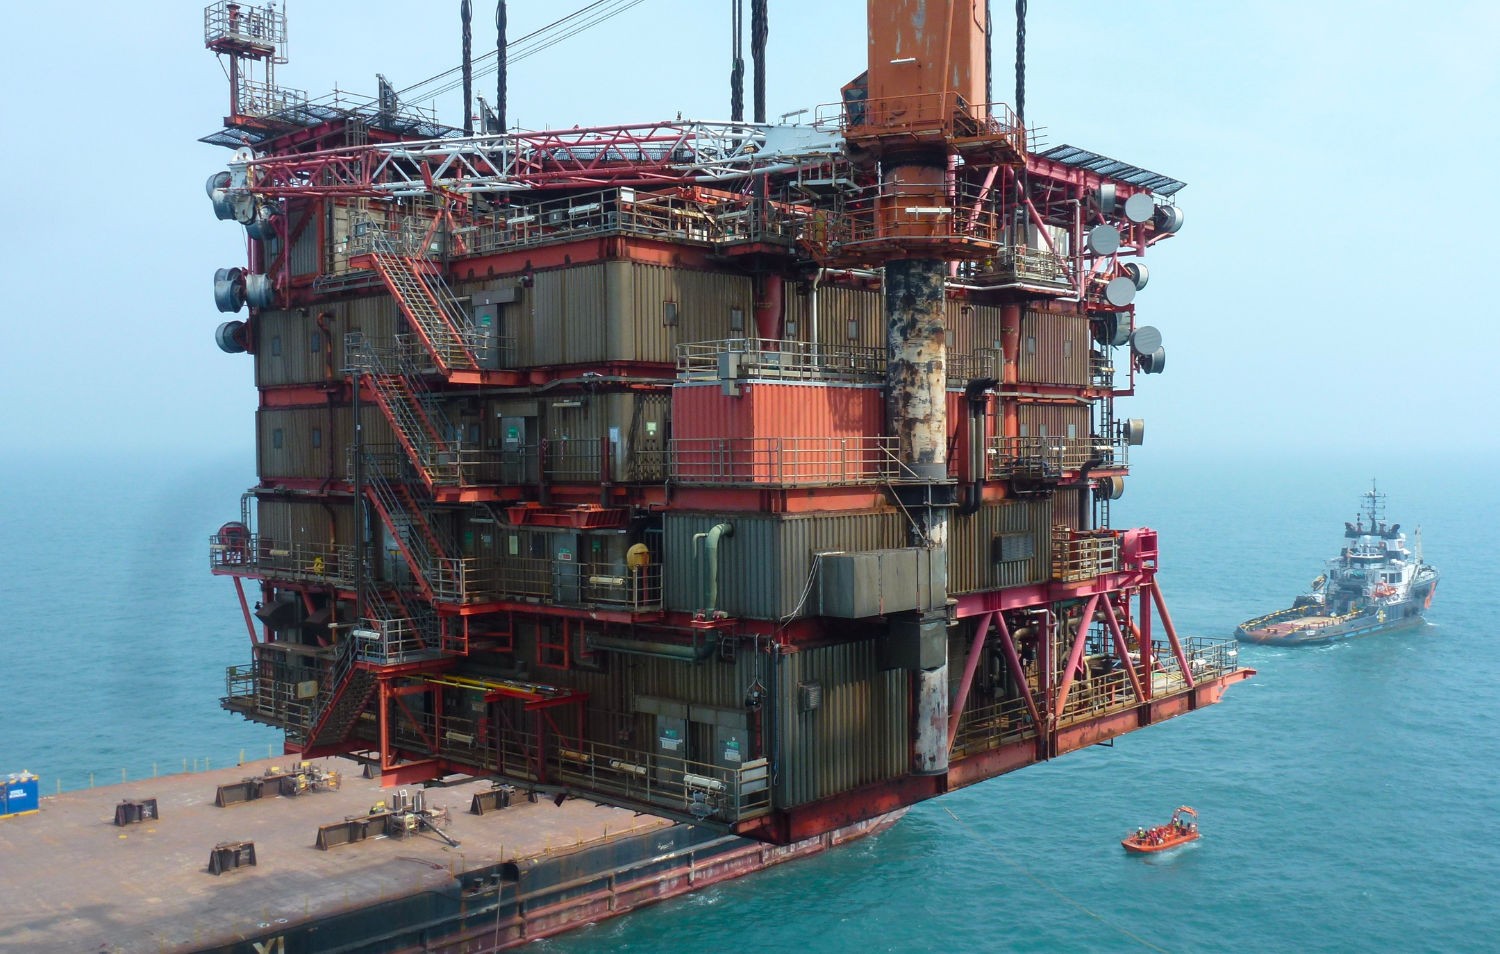 Global Maritime completes Marine Warranty Surveying Decommissioning Scope